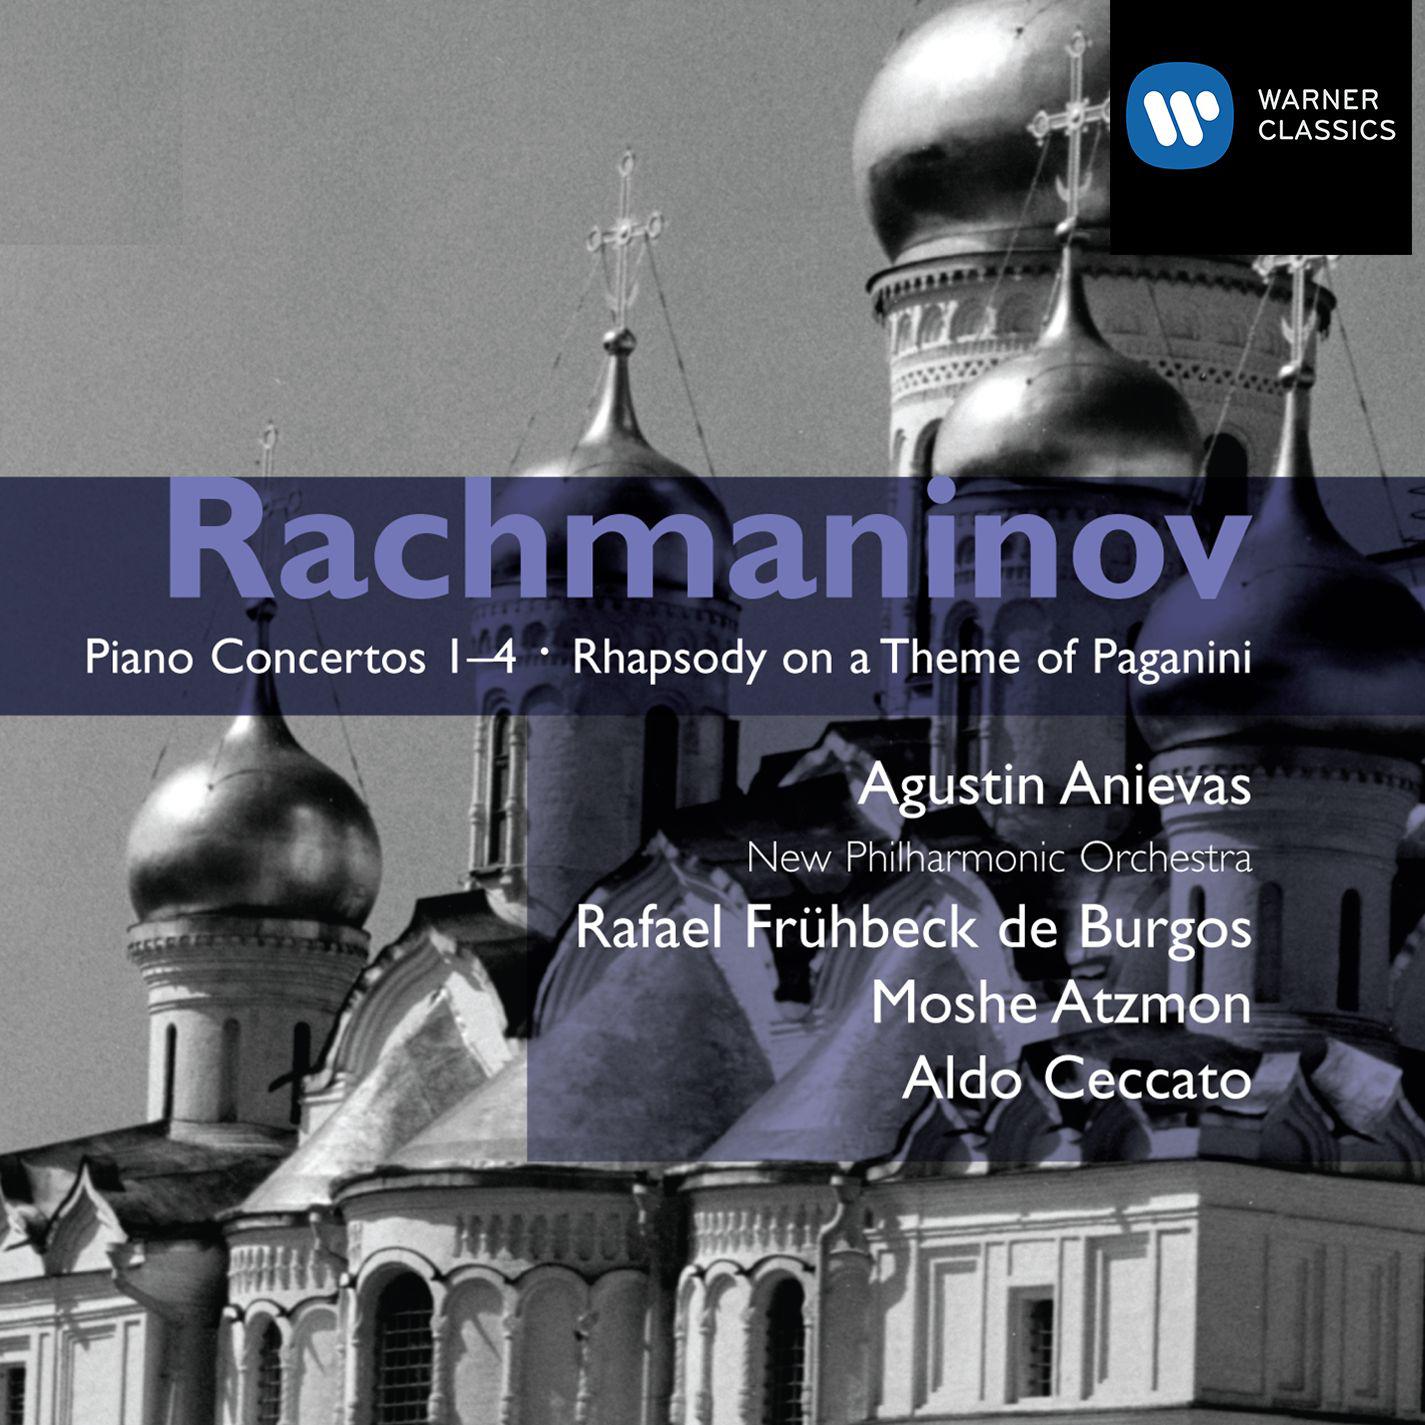 Rhapsody on a Theme of Paganini, Op. 43:Variation X. Poco marcato